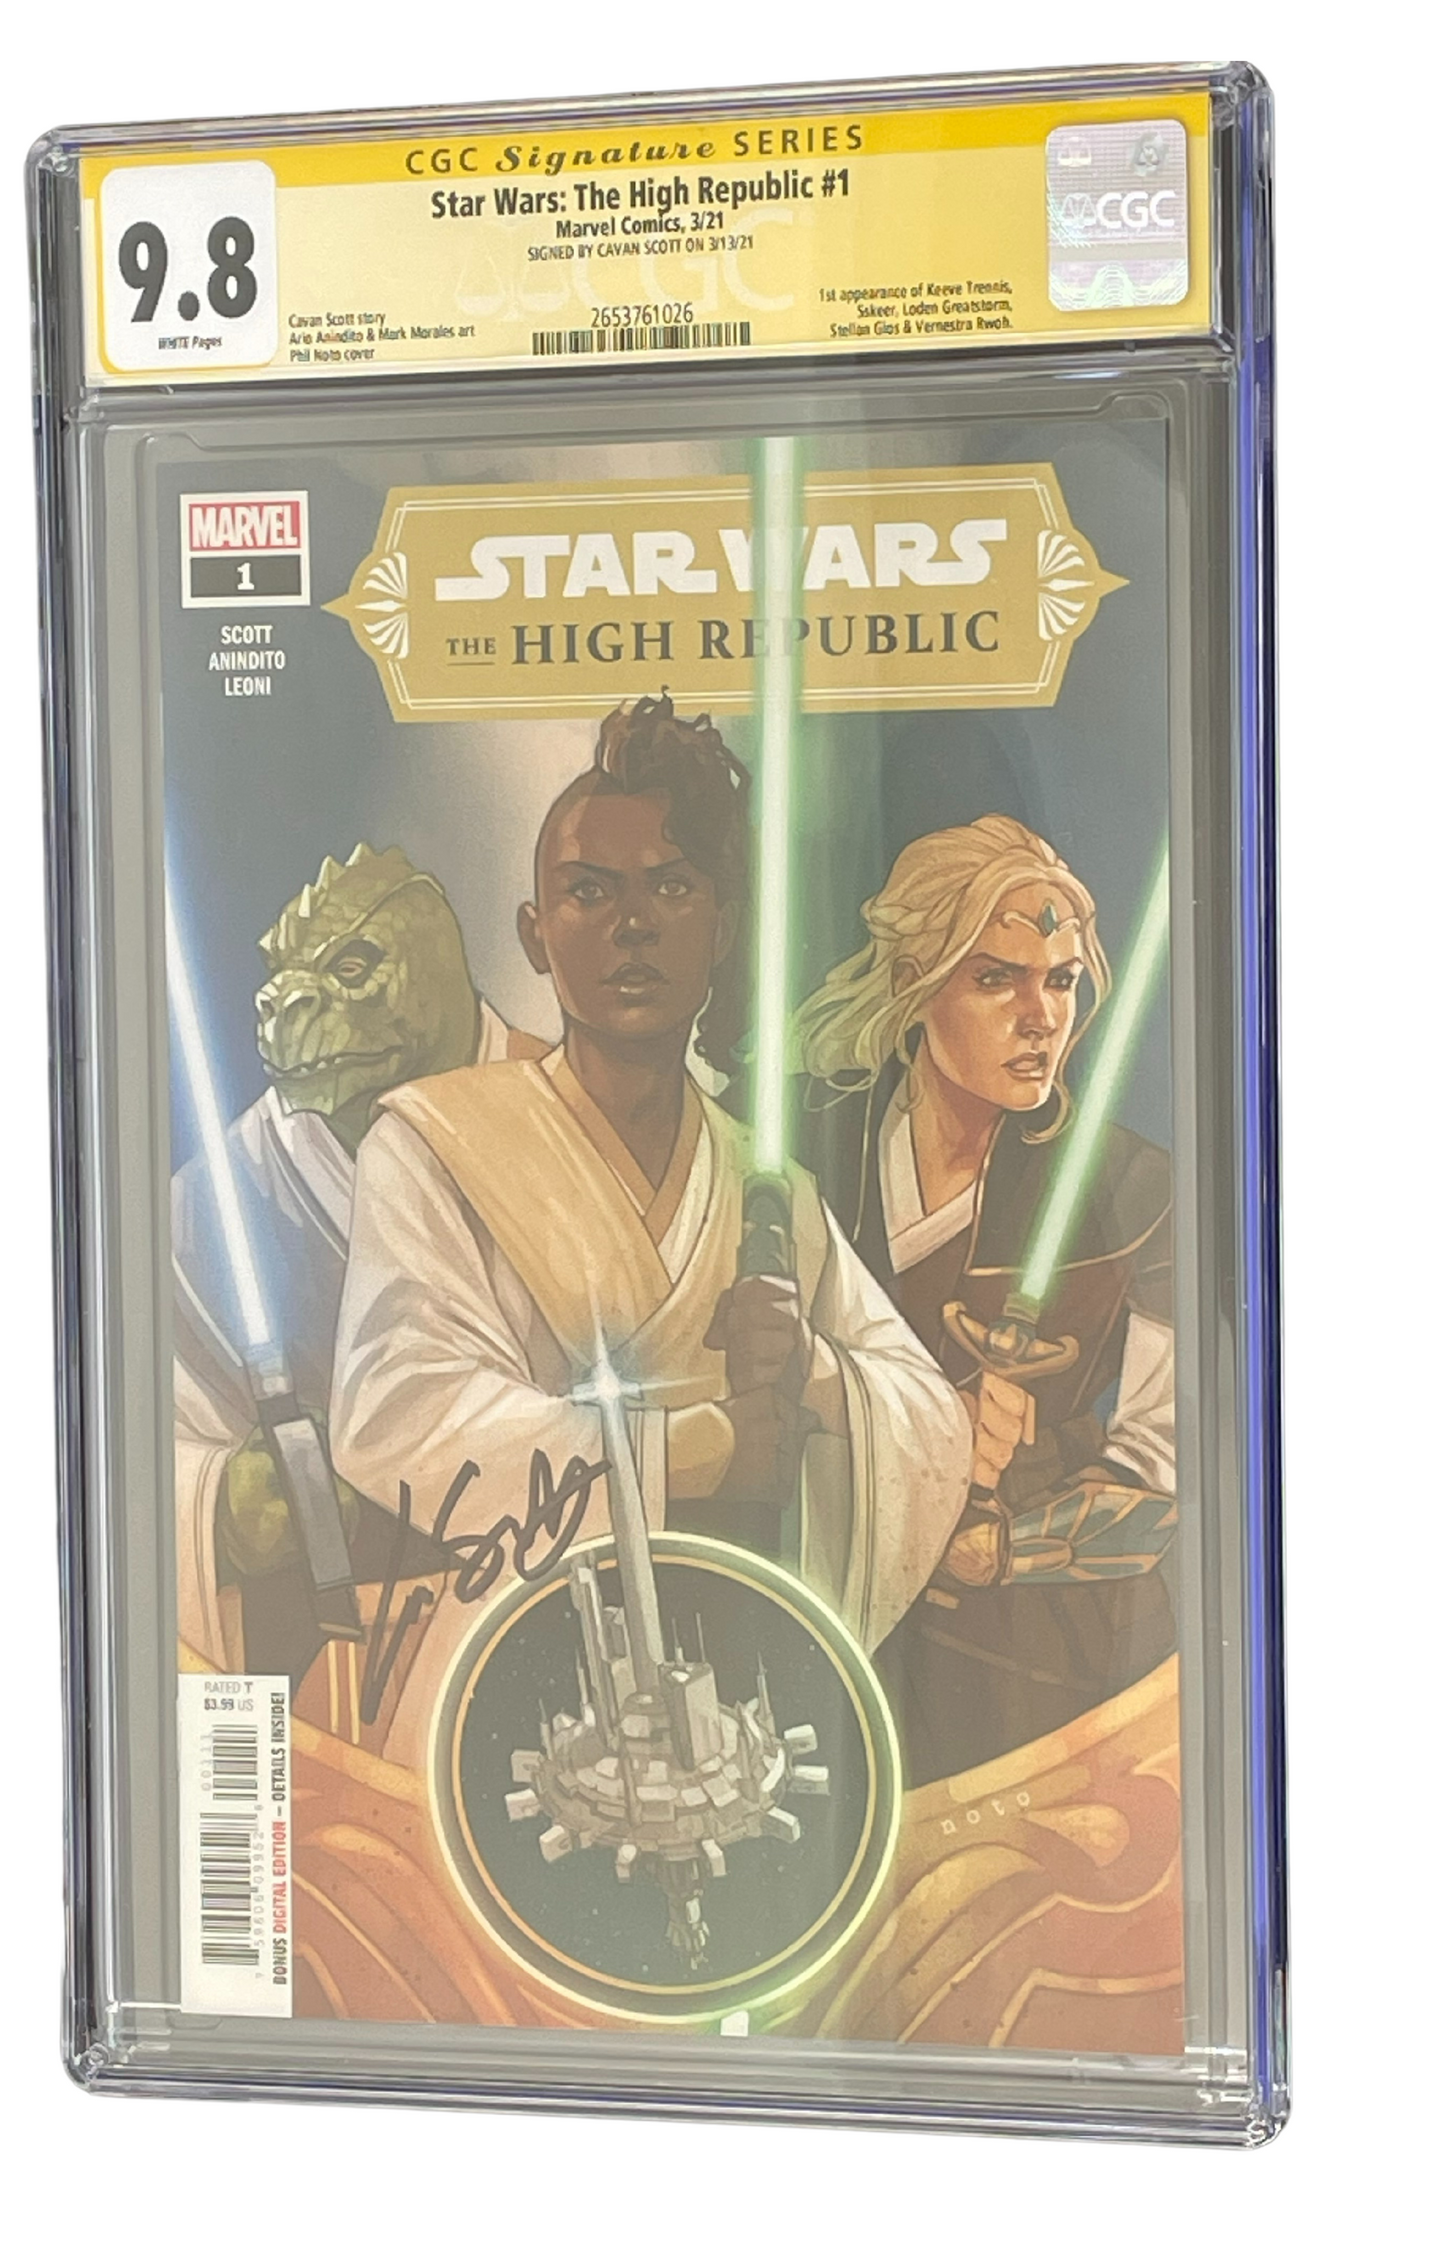 CGC Star Wars: The High Republic #1 - Signature Series (9.8)